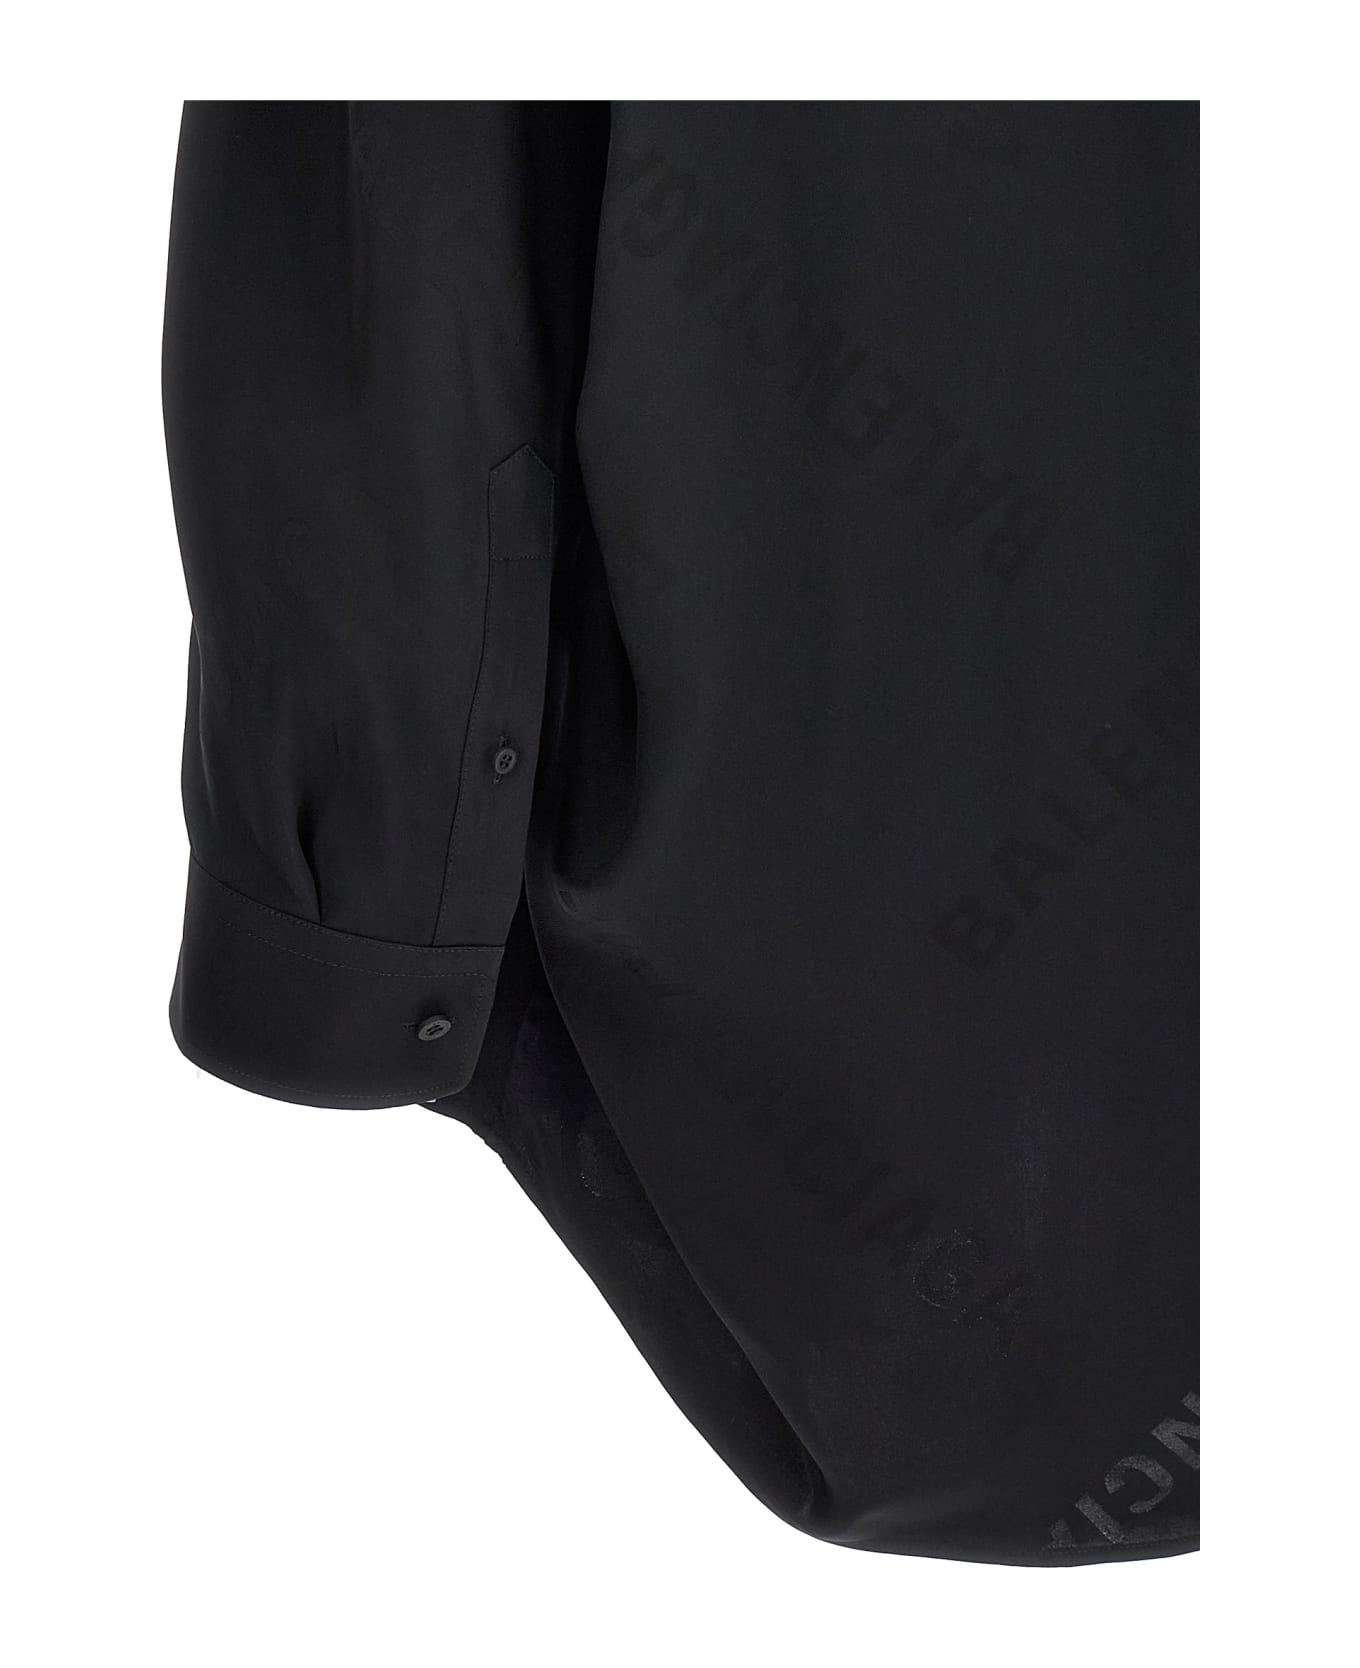 Balenciaga Jacquard Logo Shirt - Black   シャツ